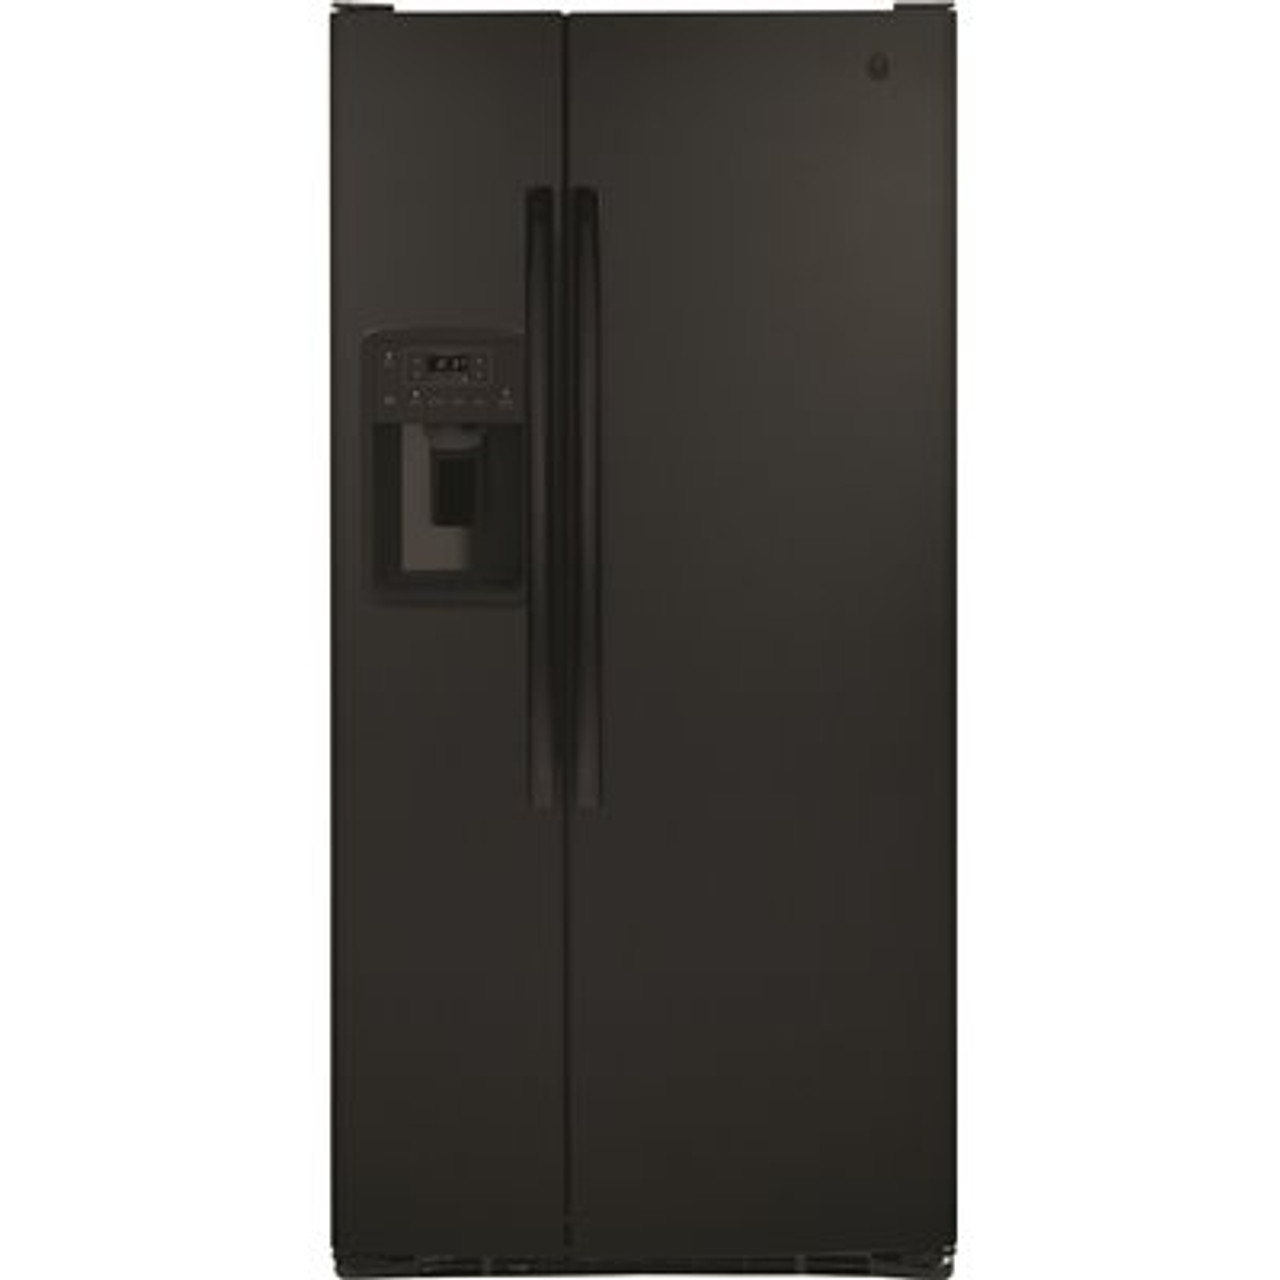 Ge 23.0 Cu. Ft. Side By Side Refrigerator In Black, Standard Depth